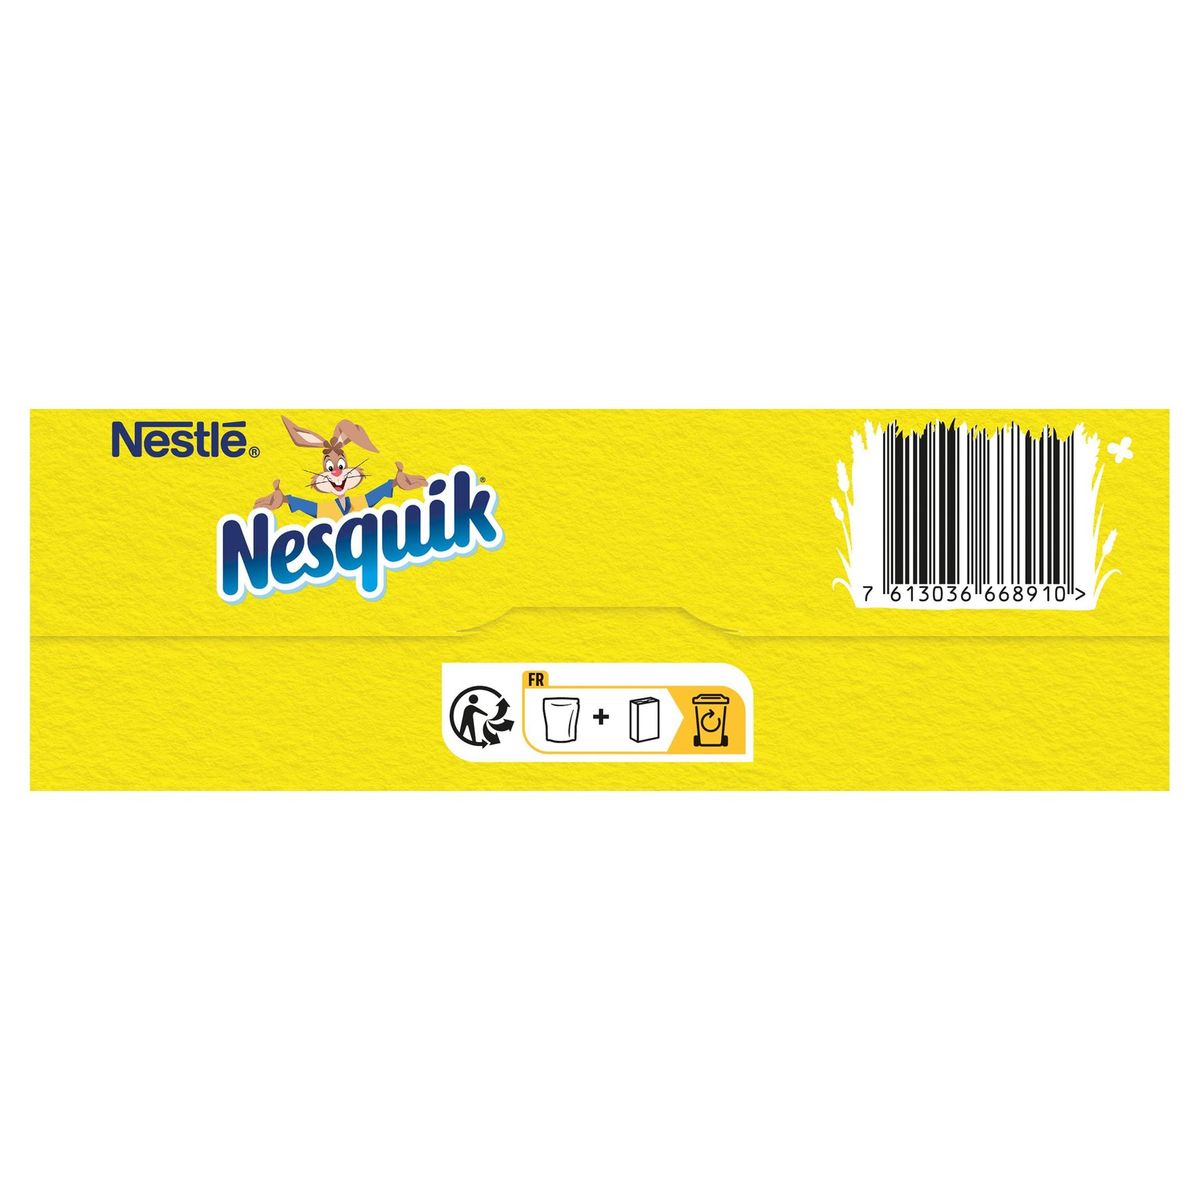 Nesquik Céréales BIO Chocolat 375 g